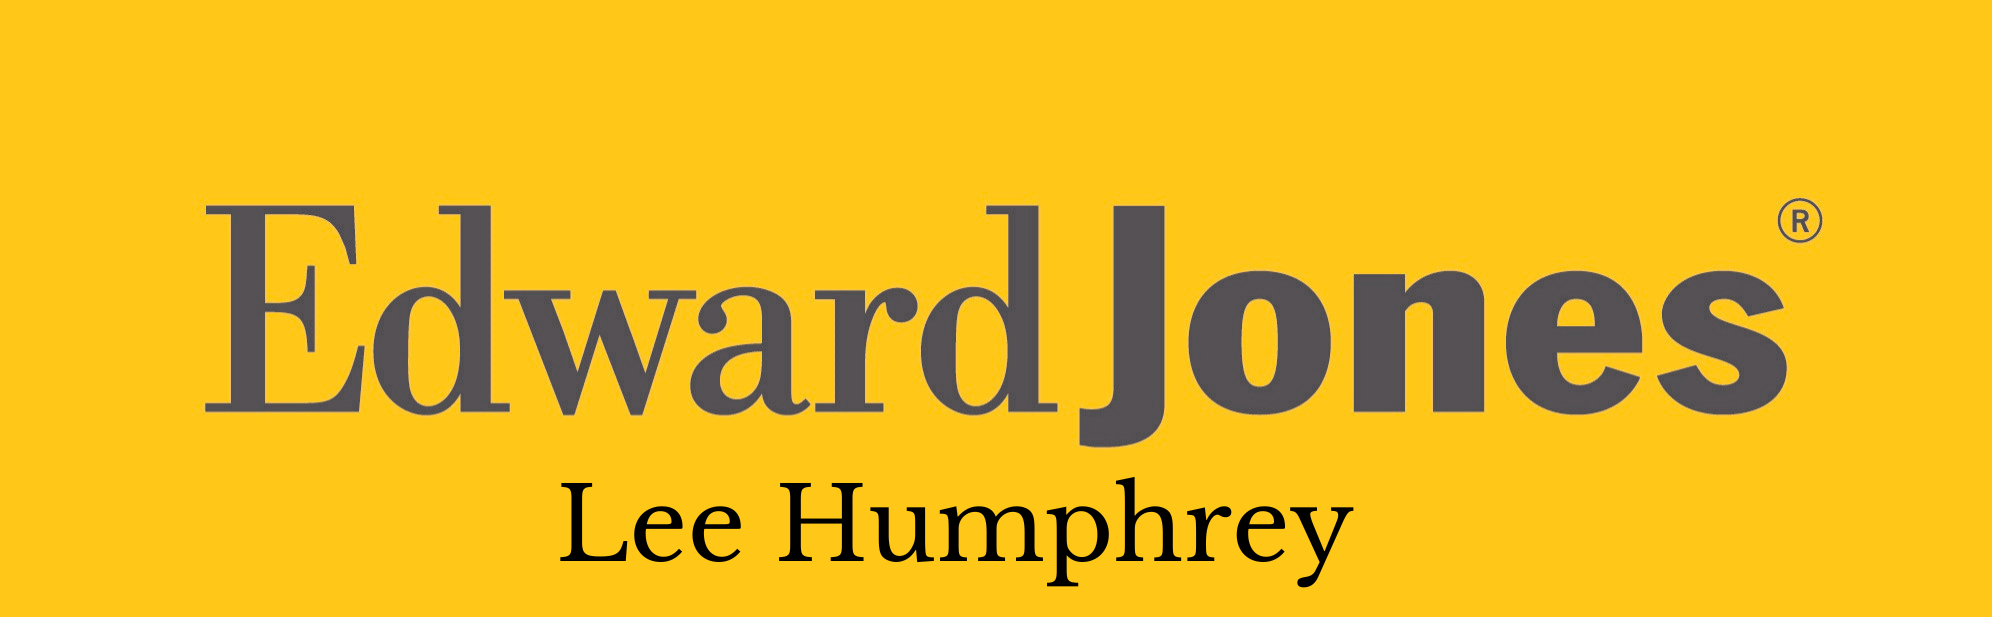 G. Edward Jones Lee Humphrey (Presentación)